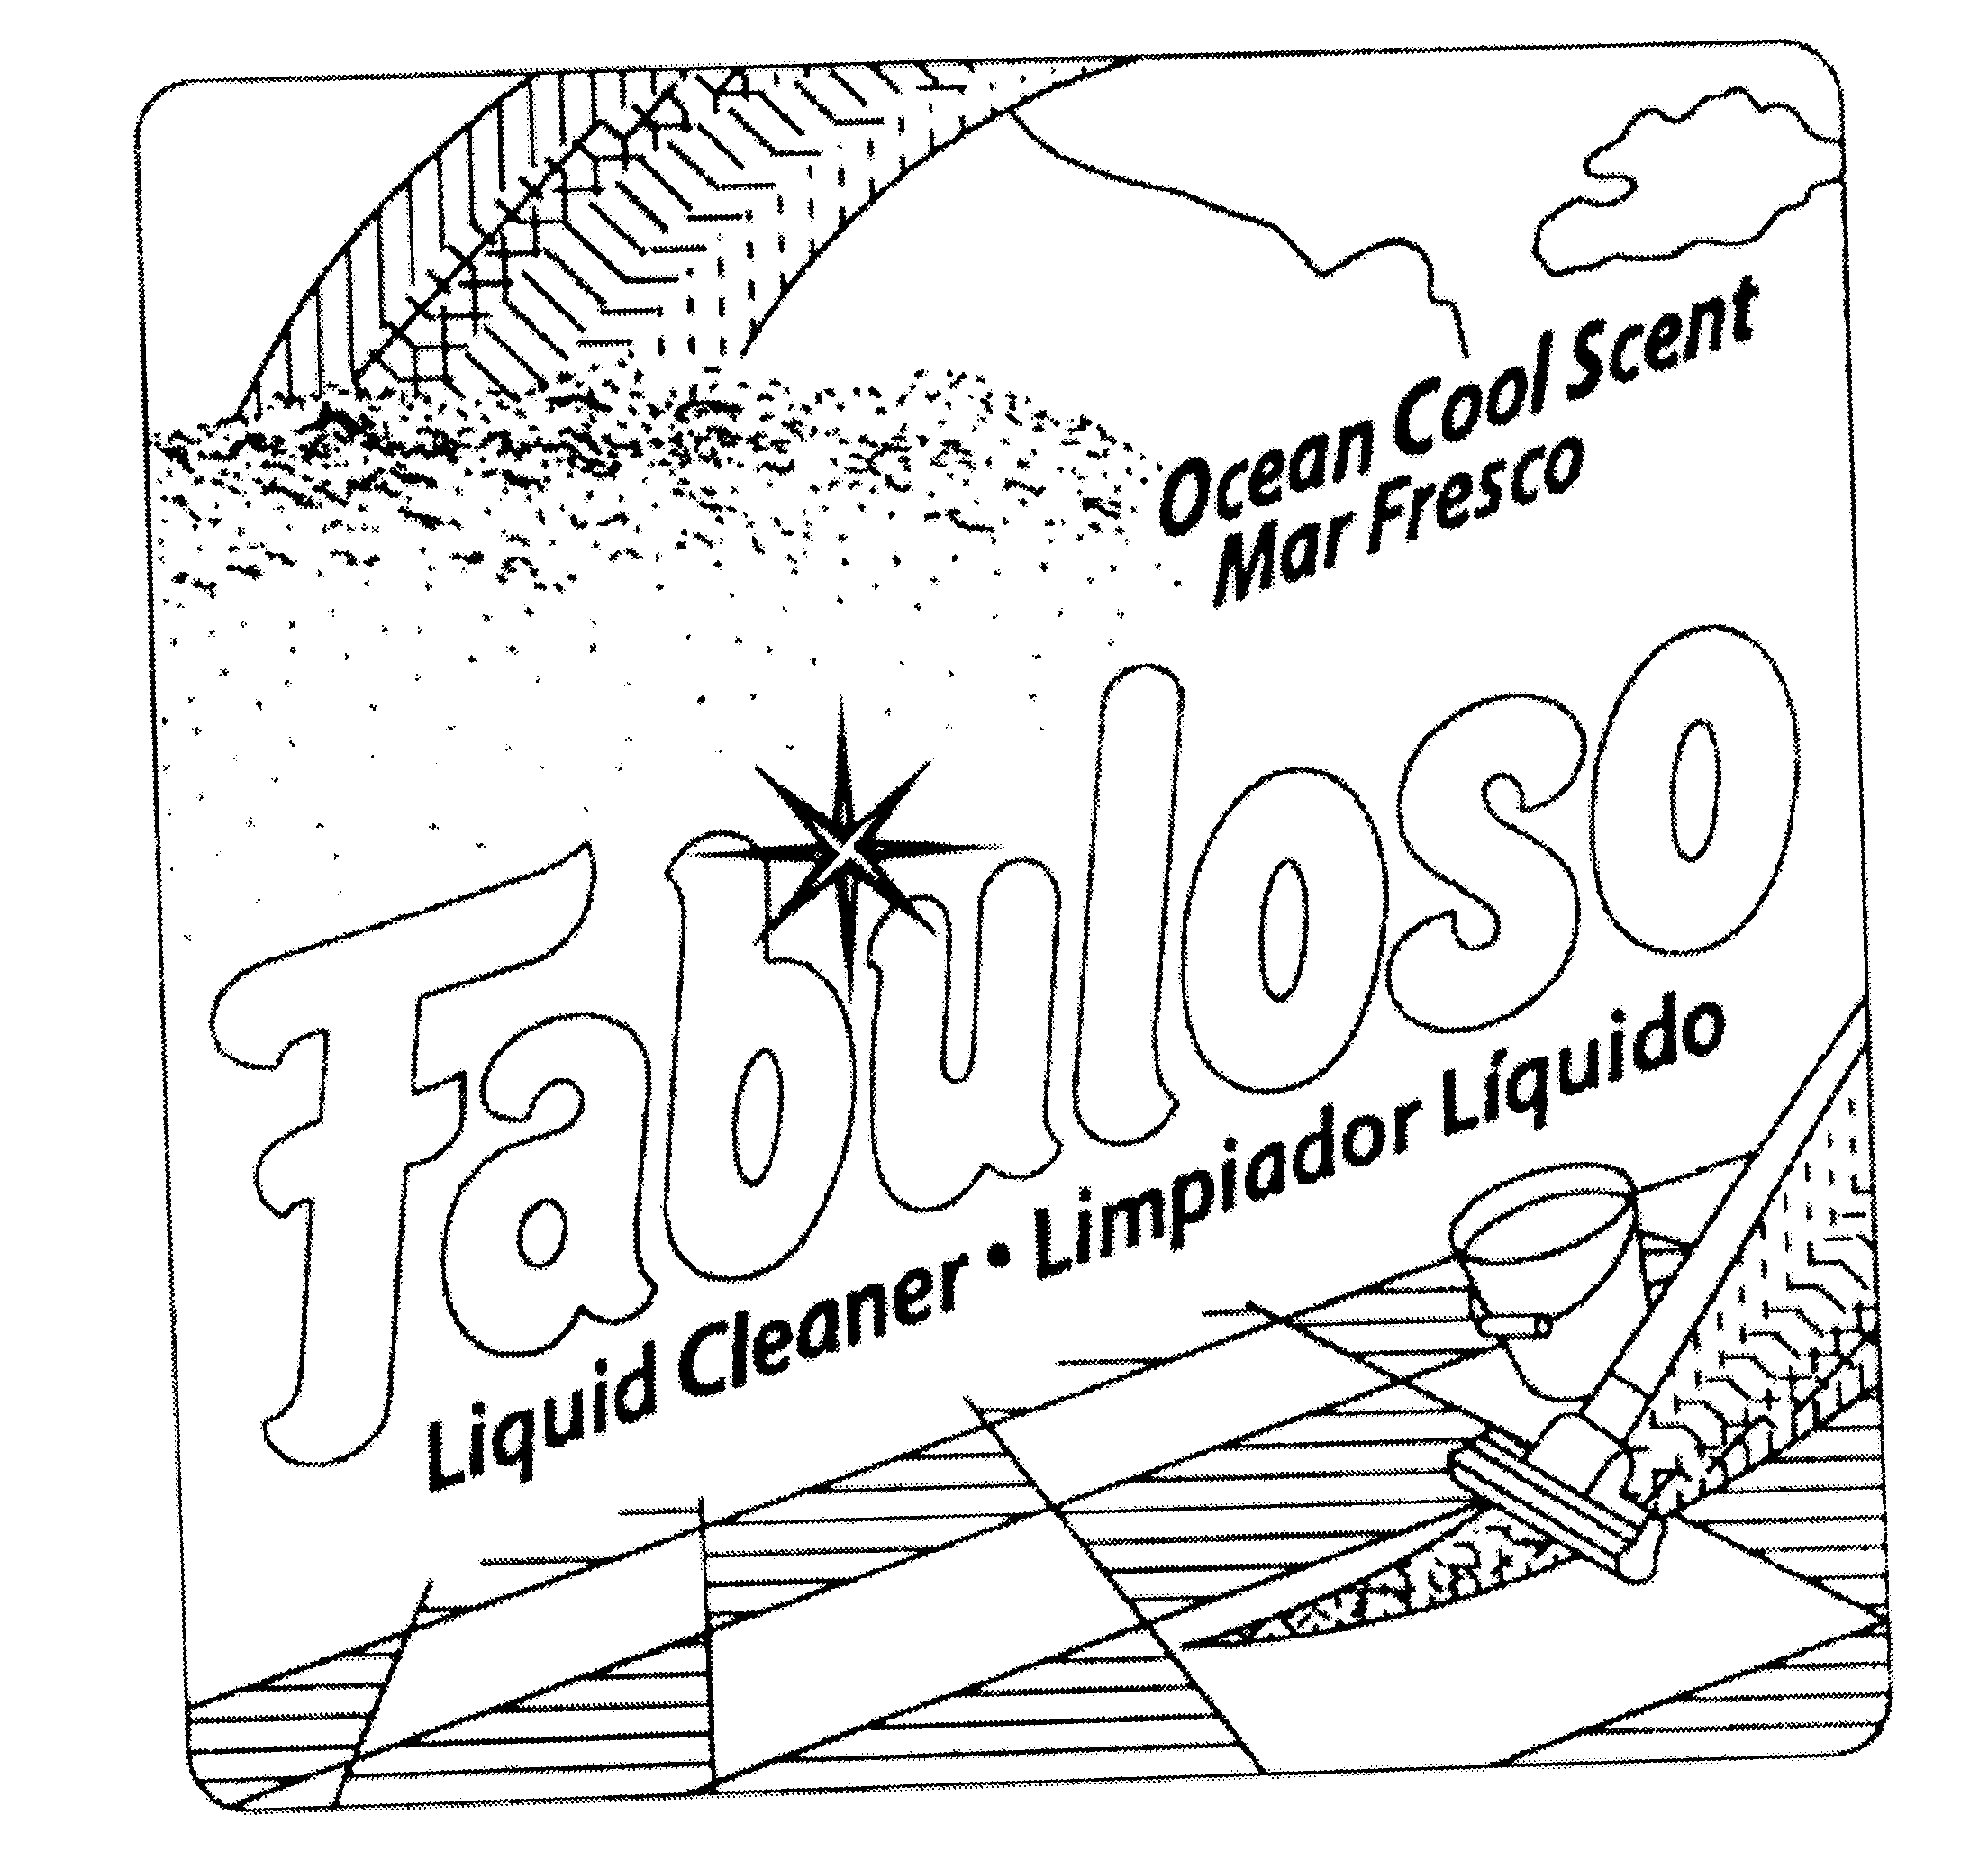  FABULOSO OCEAN COOL SCENT MAR FRESCO LIQUID CLEANER LIMPIADOR LIQUIDO